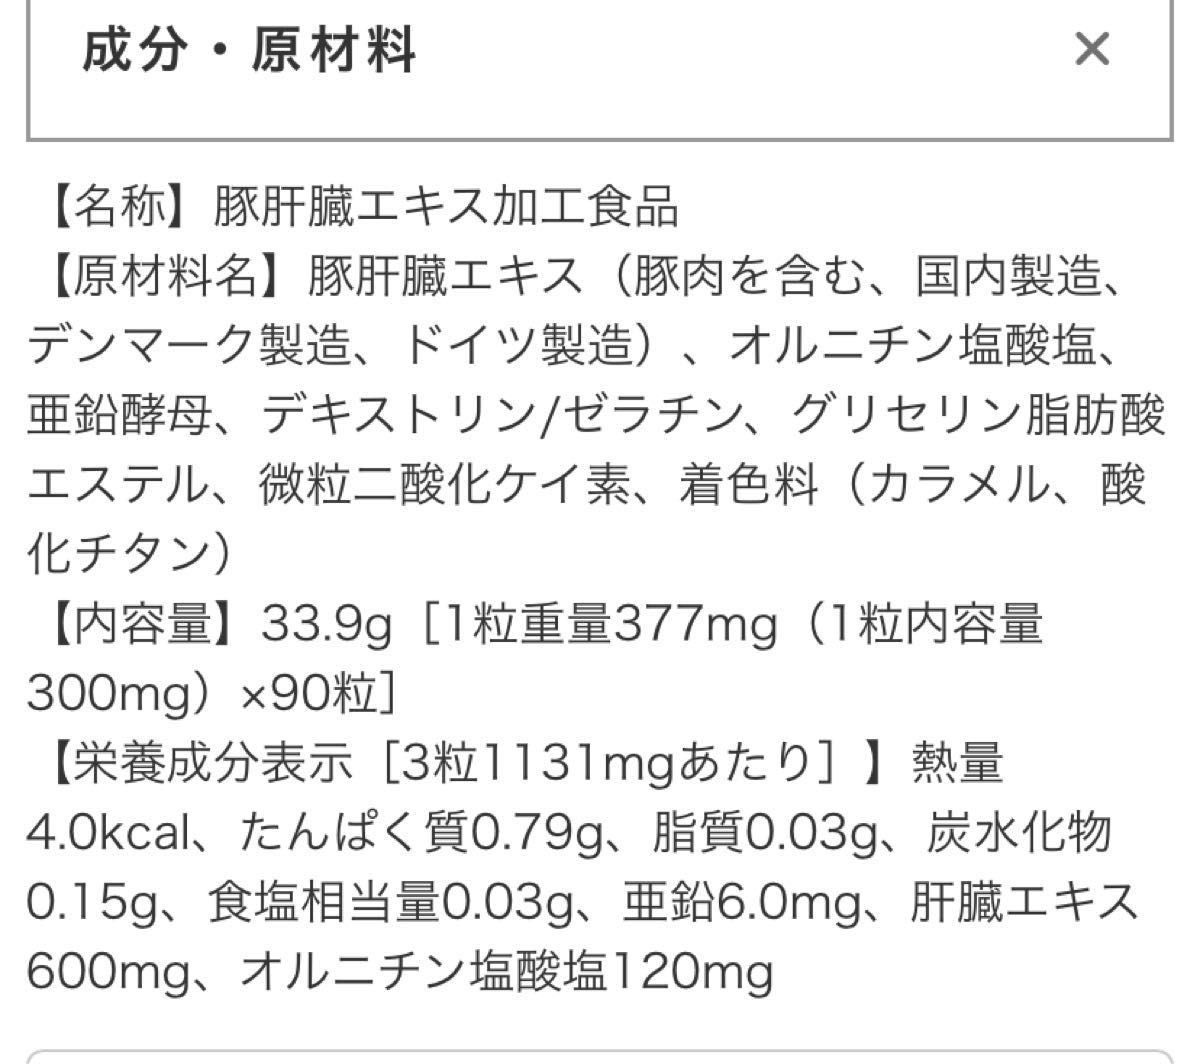 DHC 肝臓エキス　オルニチン　30日分　90粒入　2袋セット　 